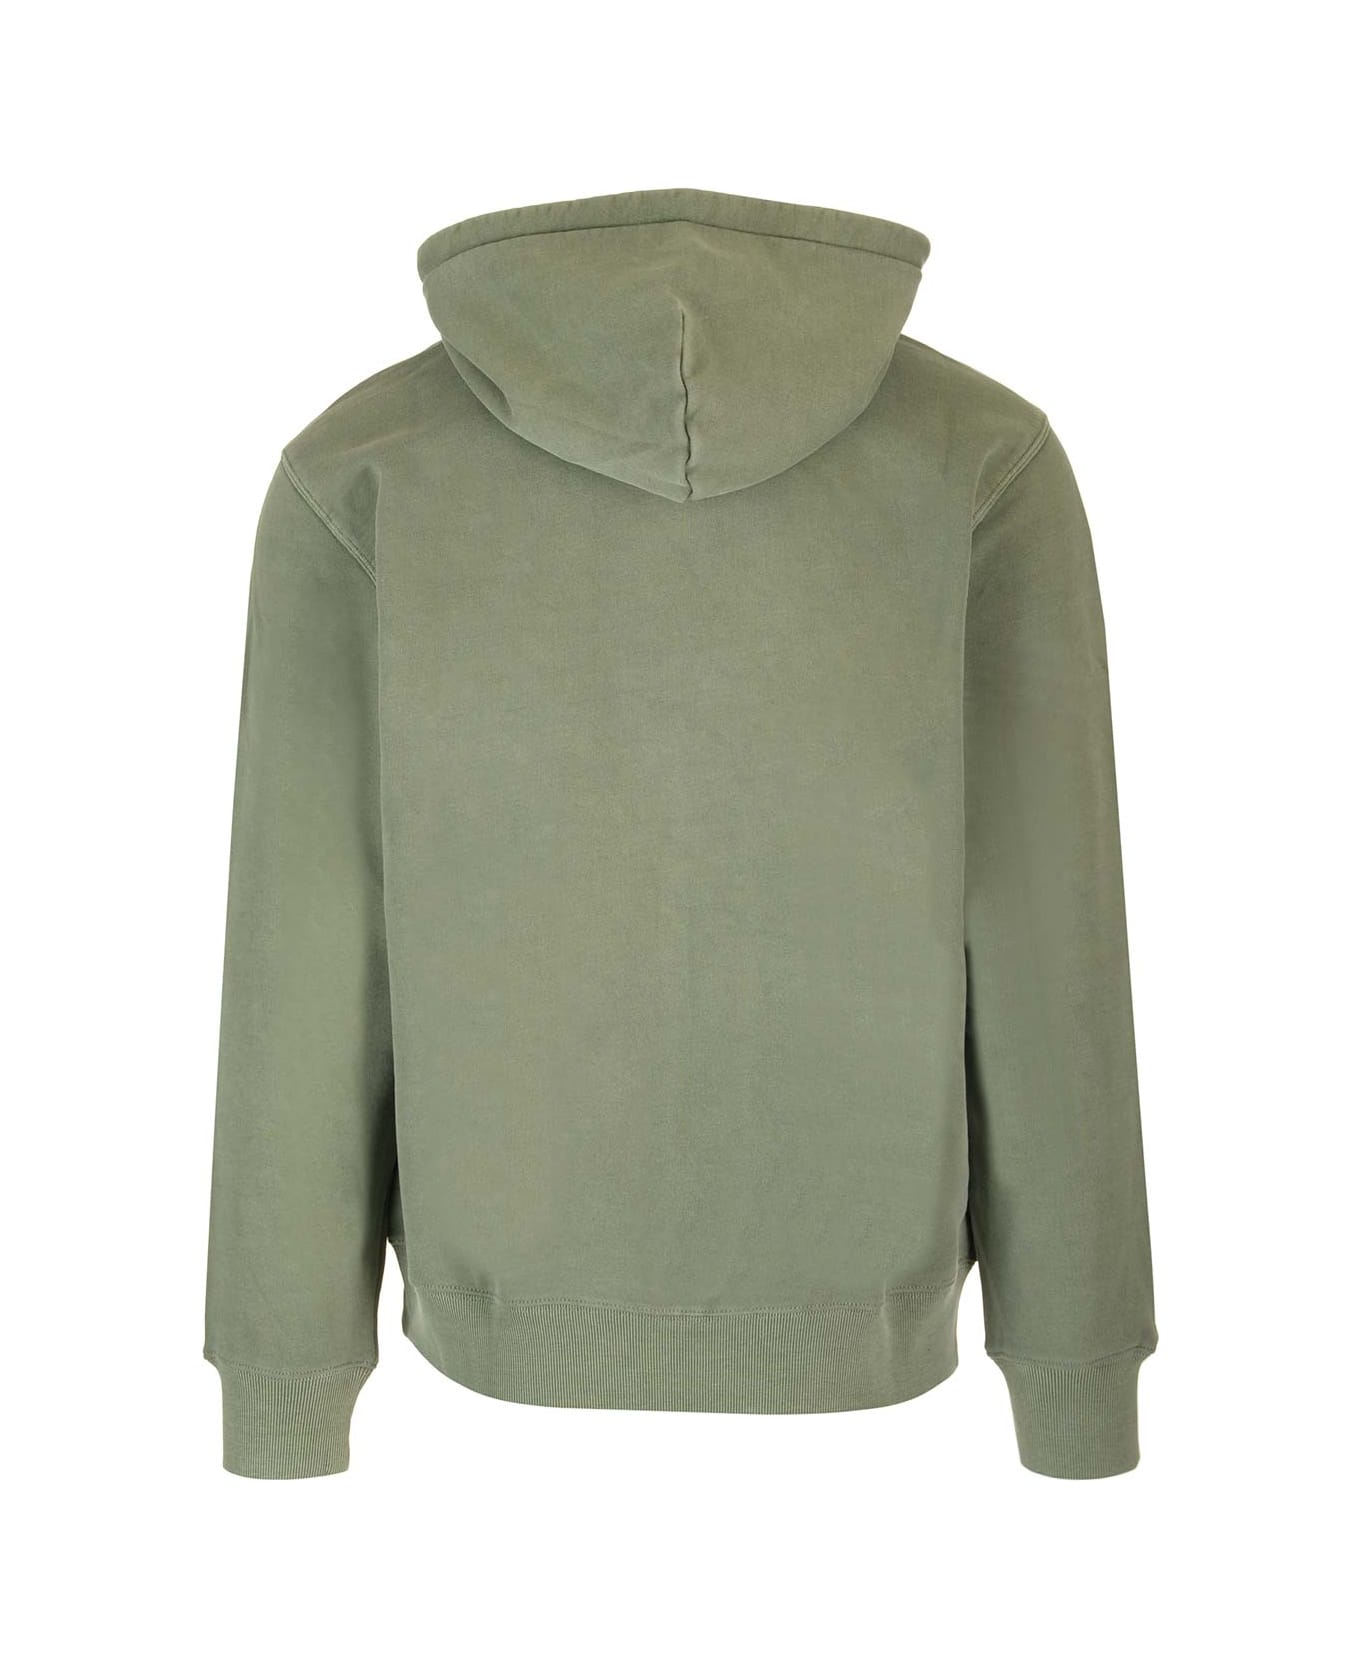 Carhartt Cotton Hooded Sweatshirt - Military